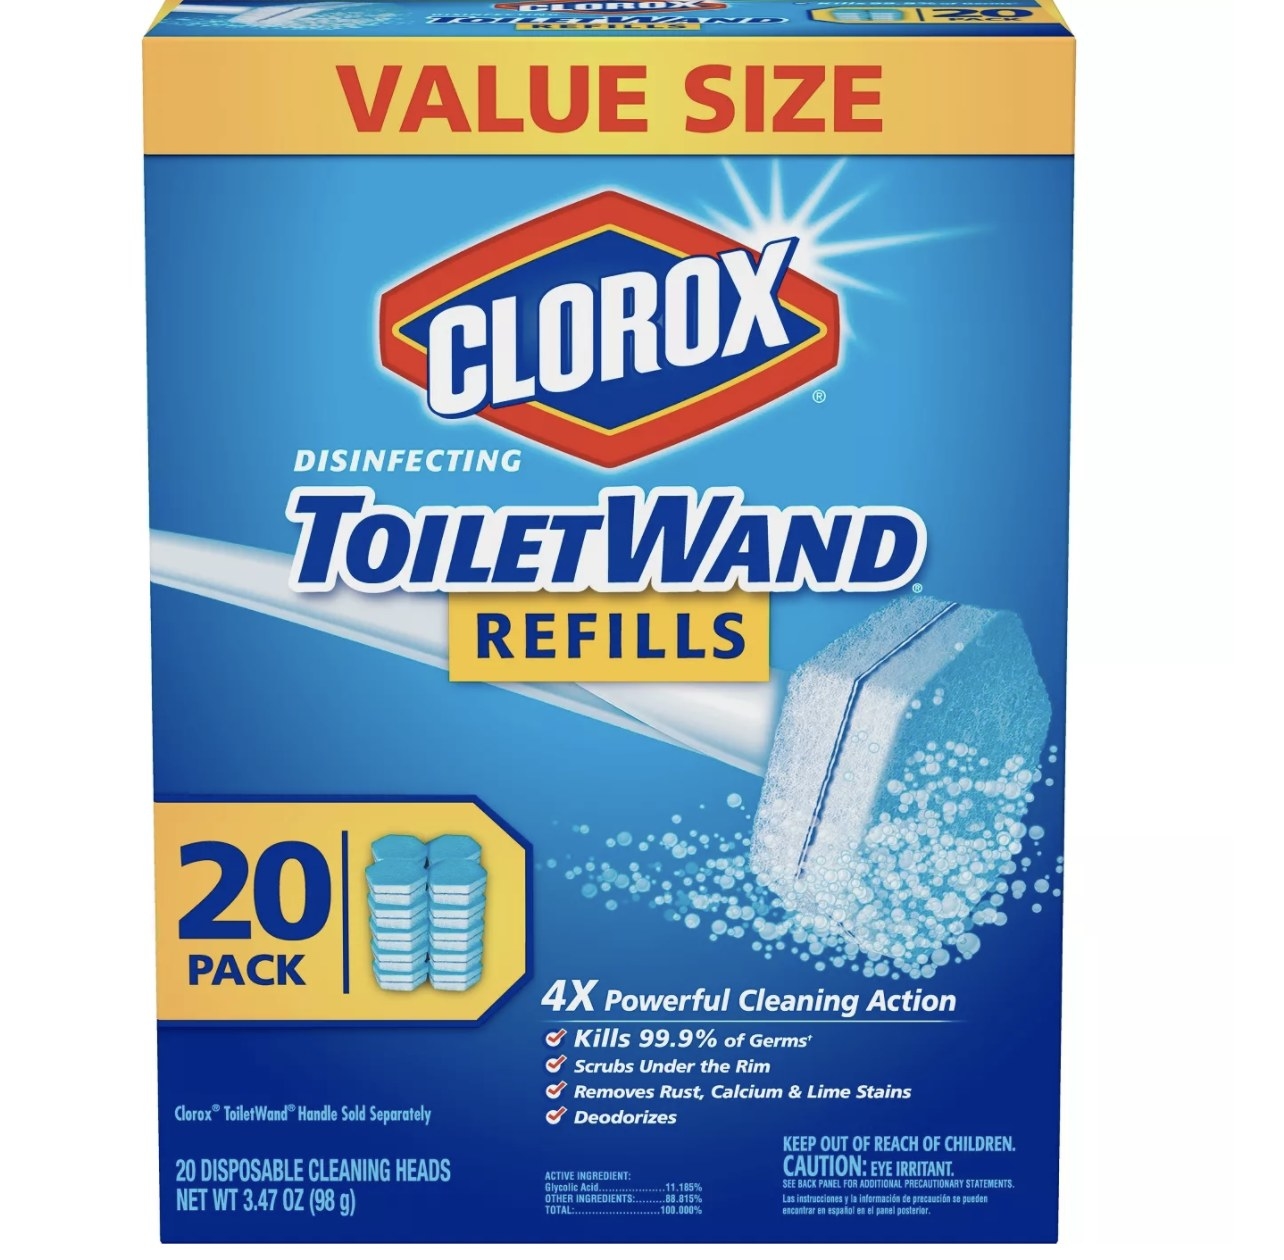 The box of ToiletWand refills 